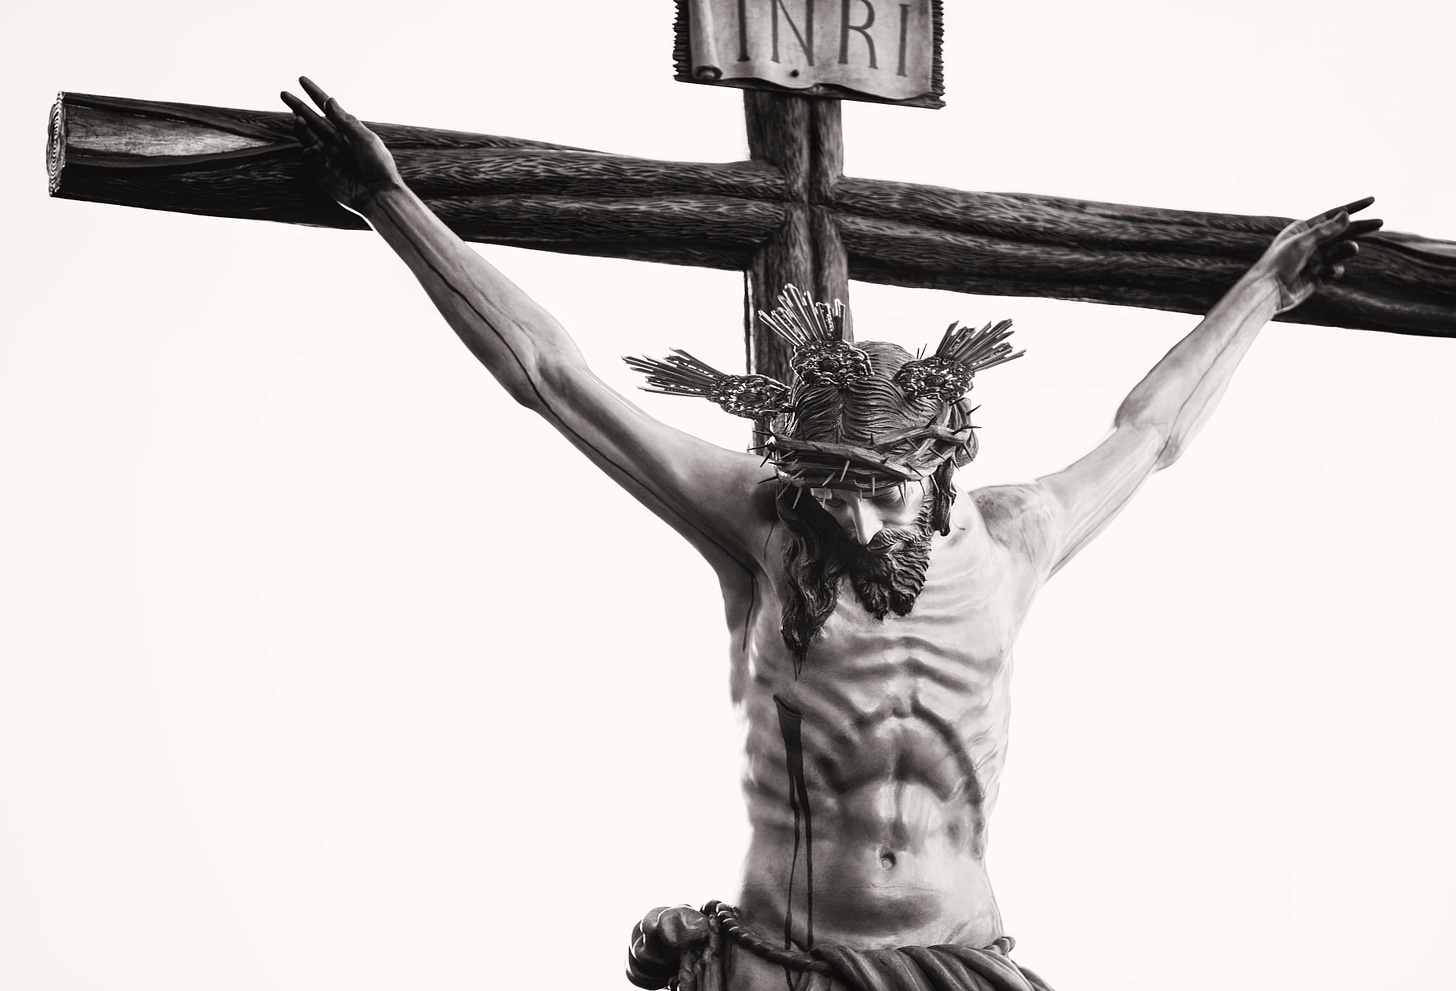 Disturbing image of Jesus on the cross.